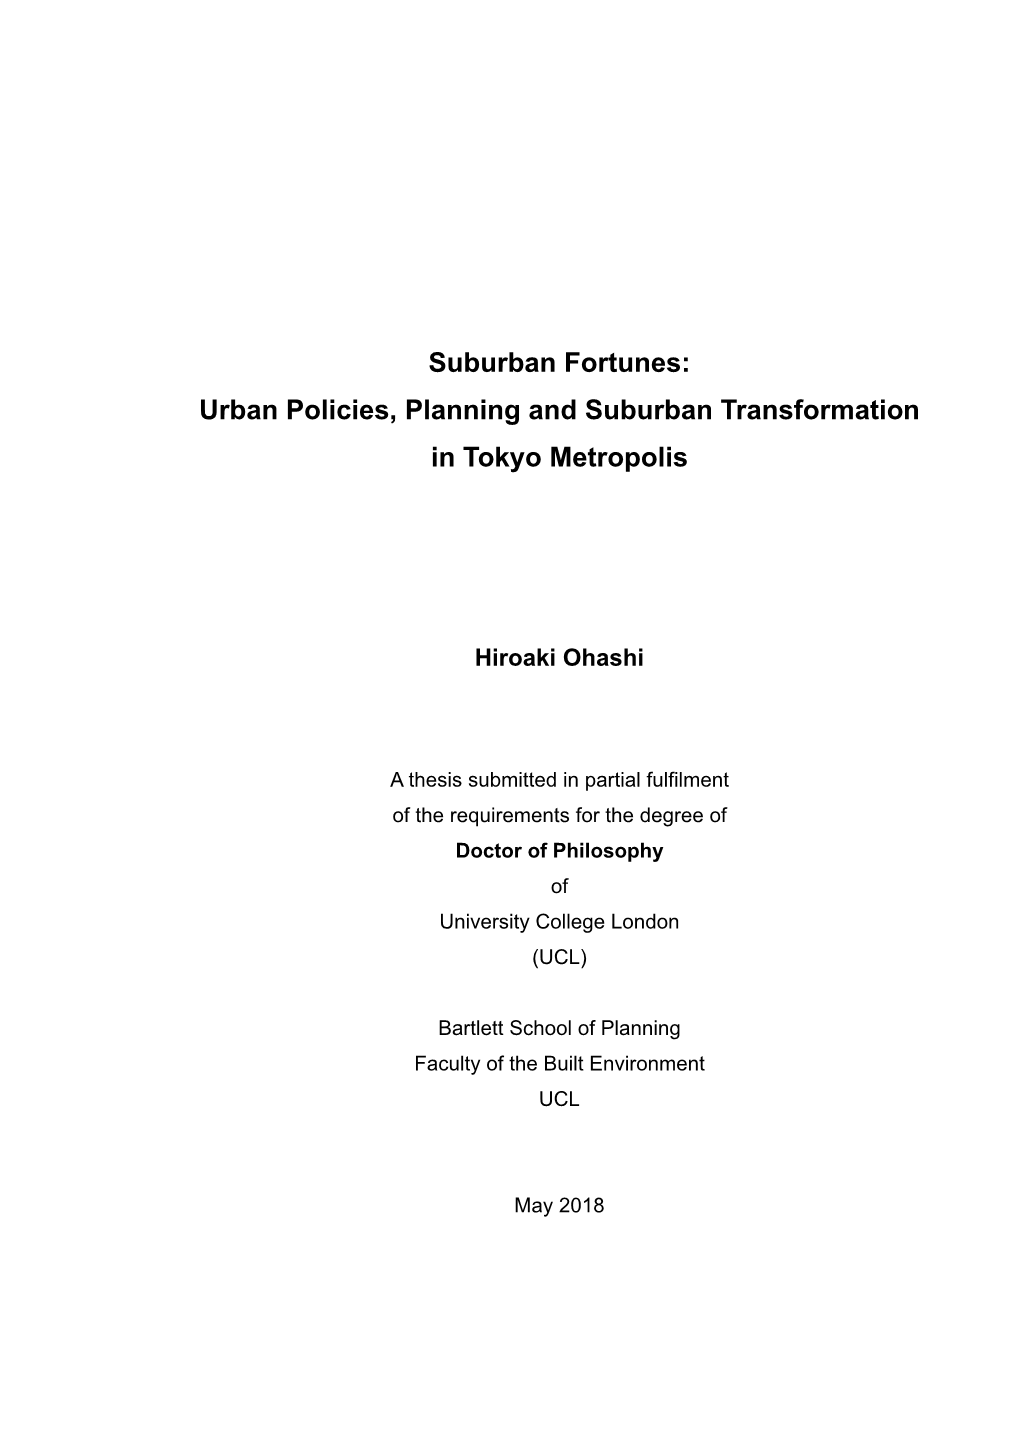 Urban Policies, Planning and Suburban Transformation in Tokyo Metropolis